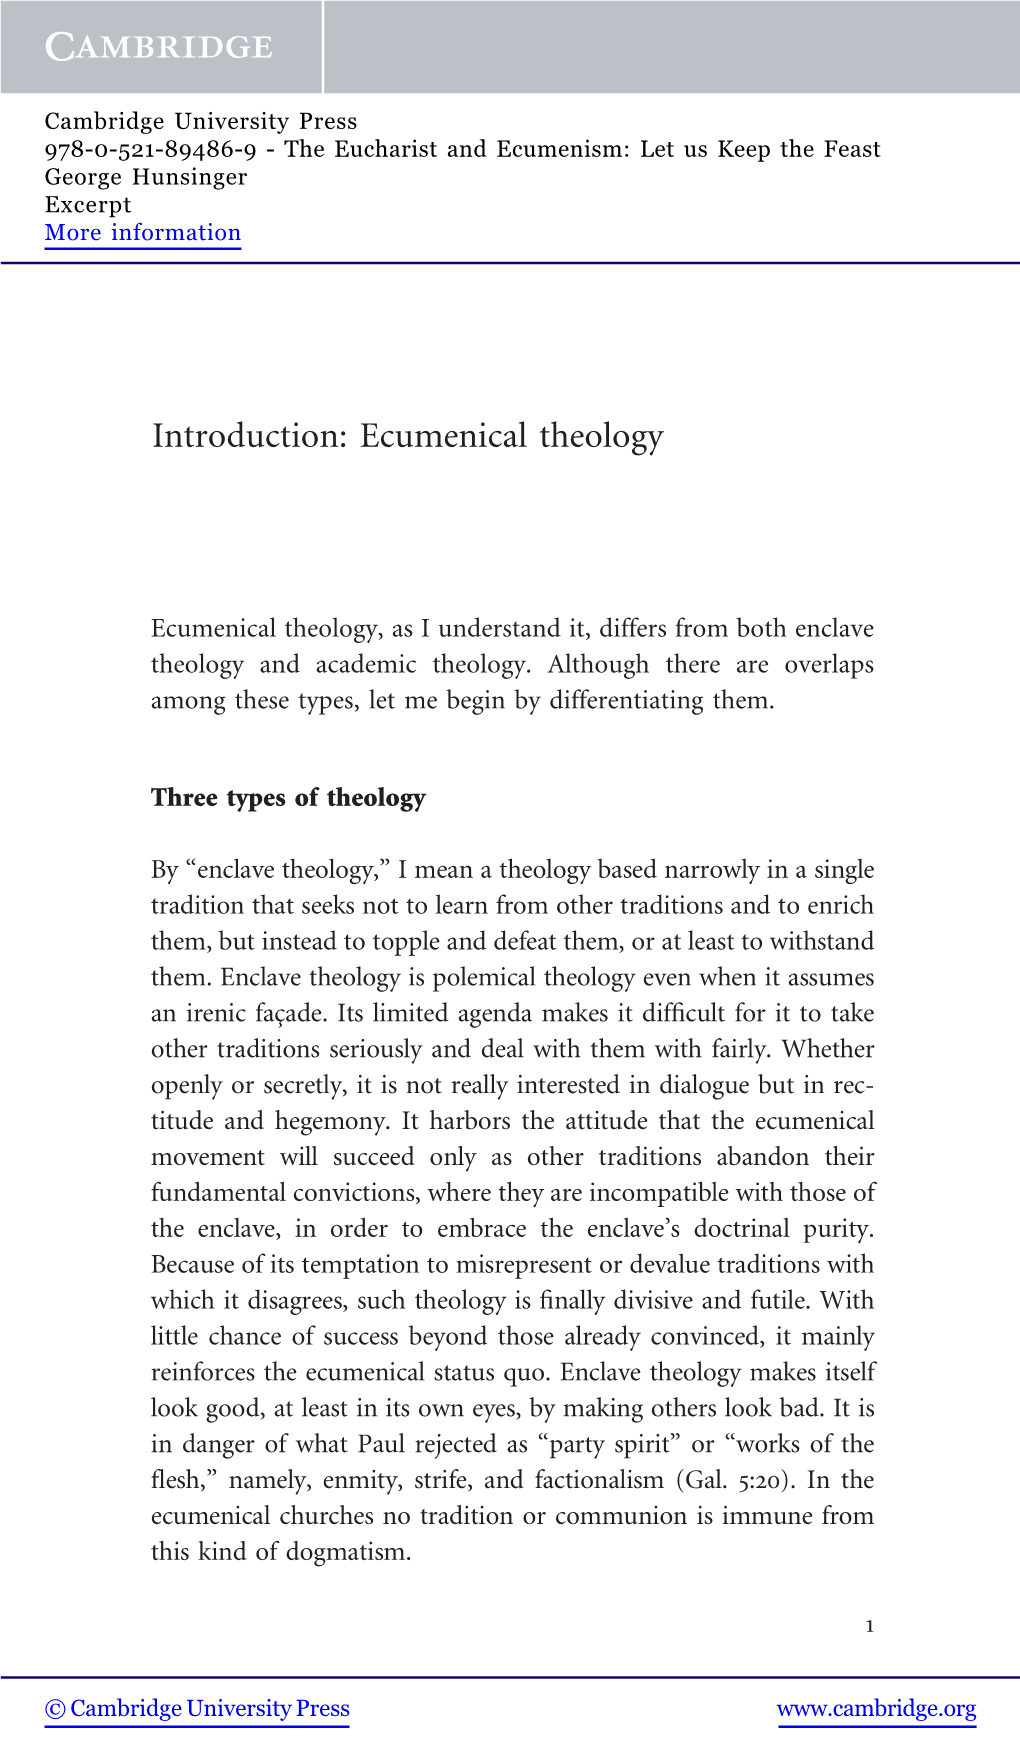 Introduction: Ecumenical Theology